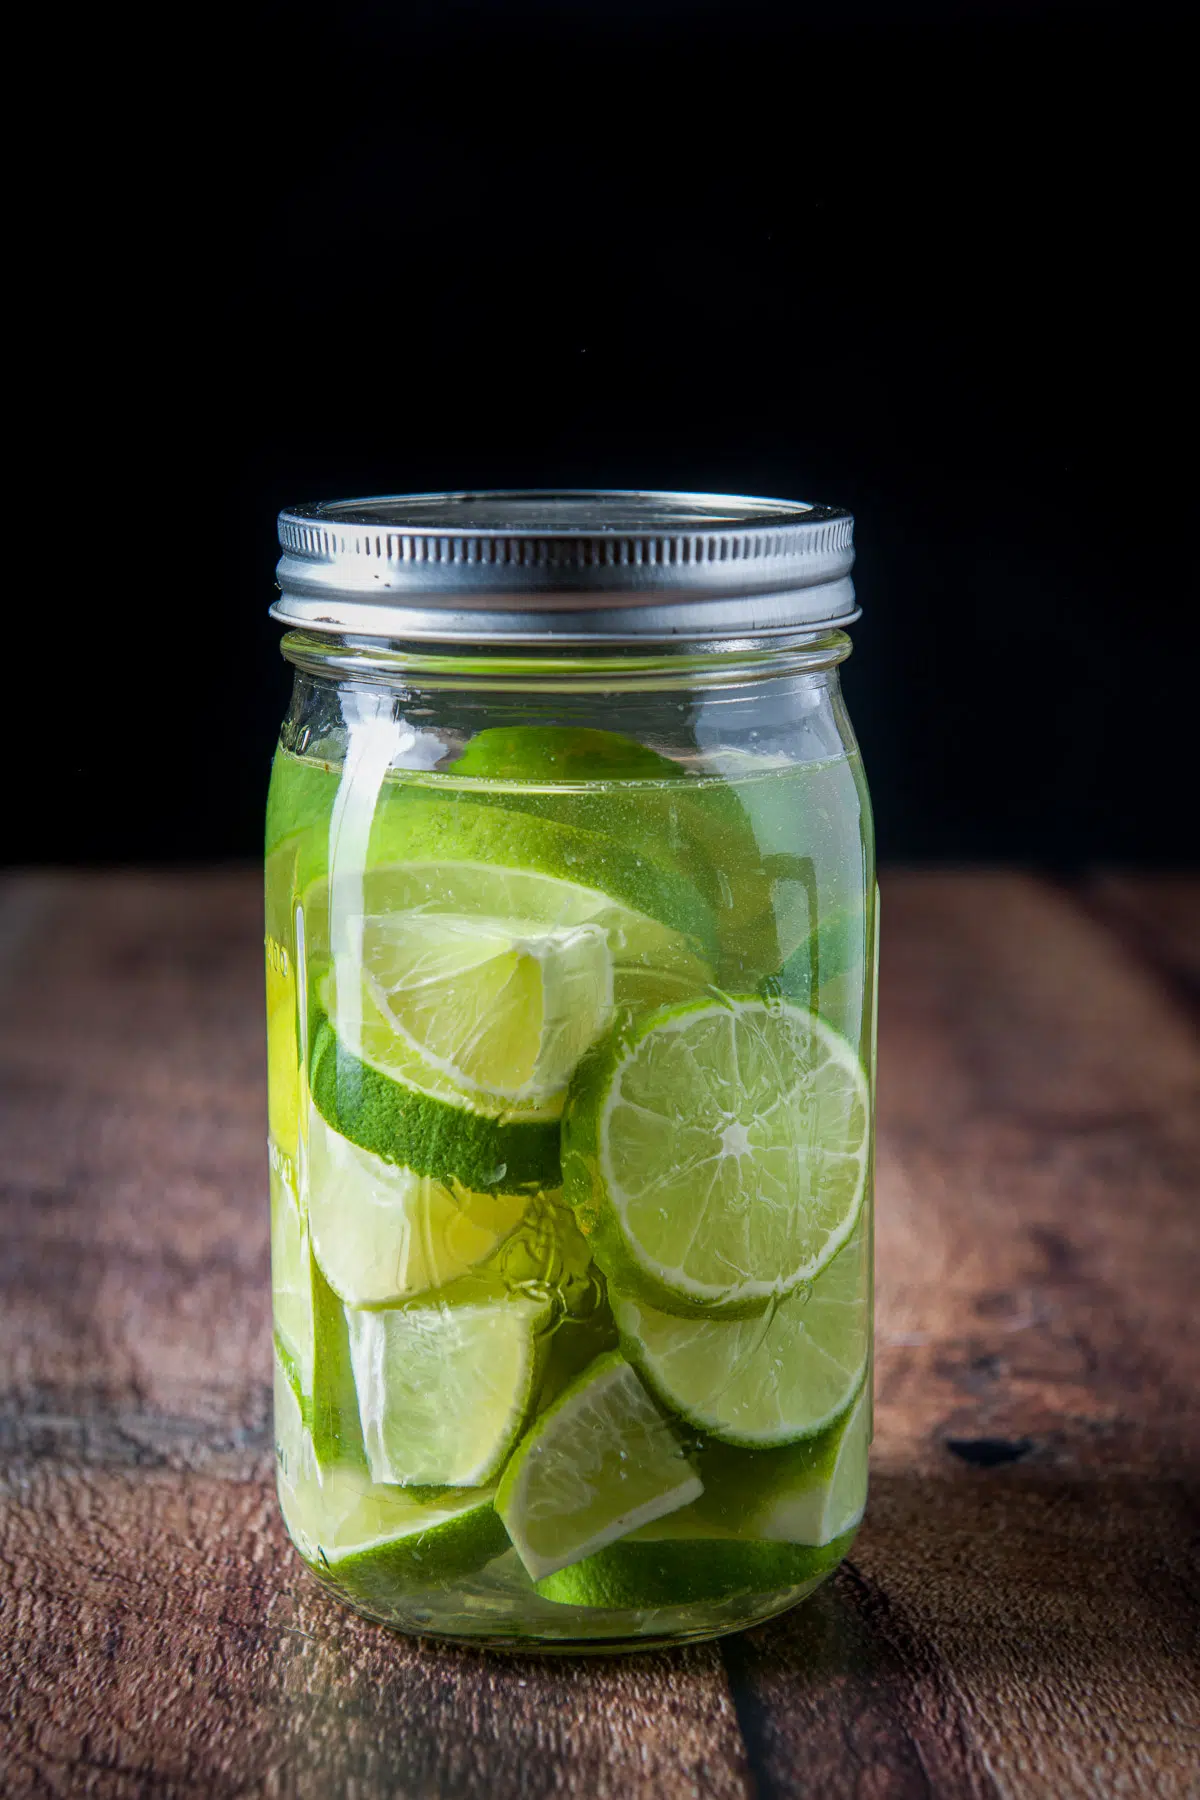 The lime vodka in a jar, shaken